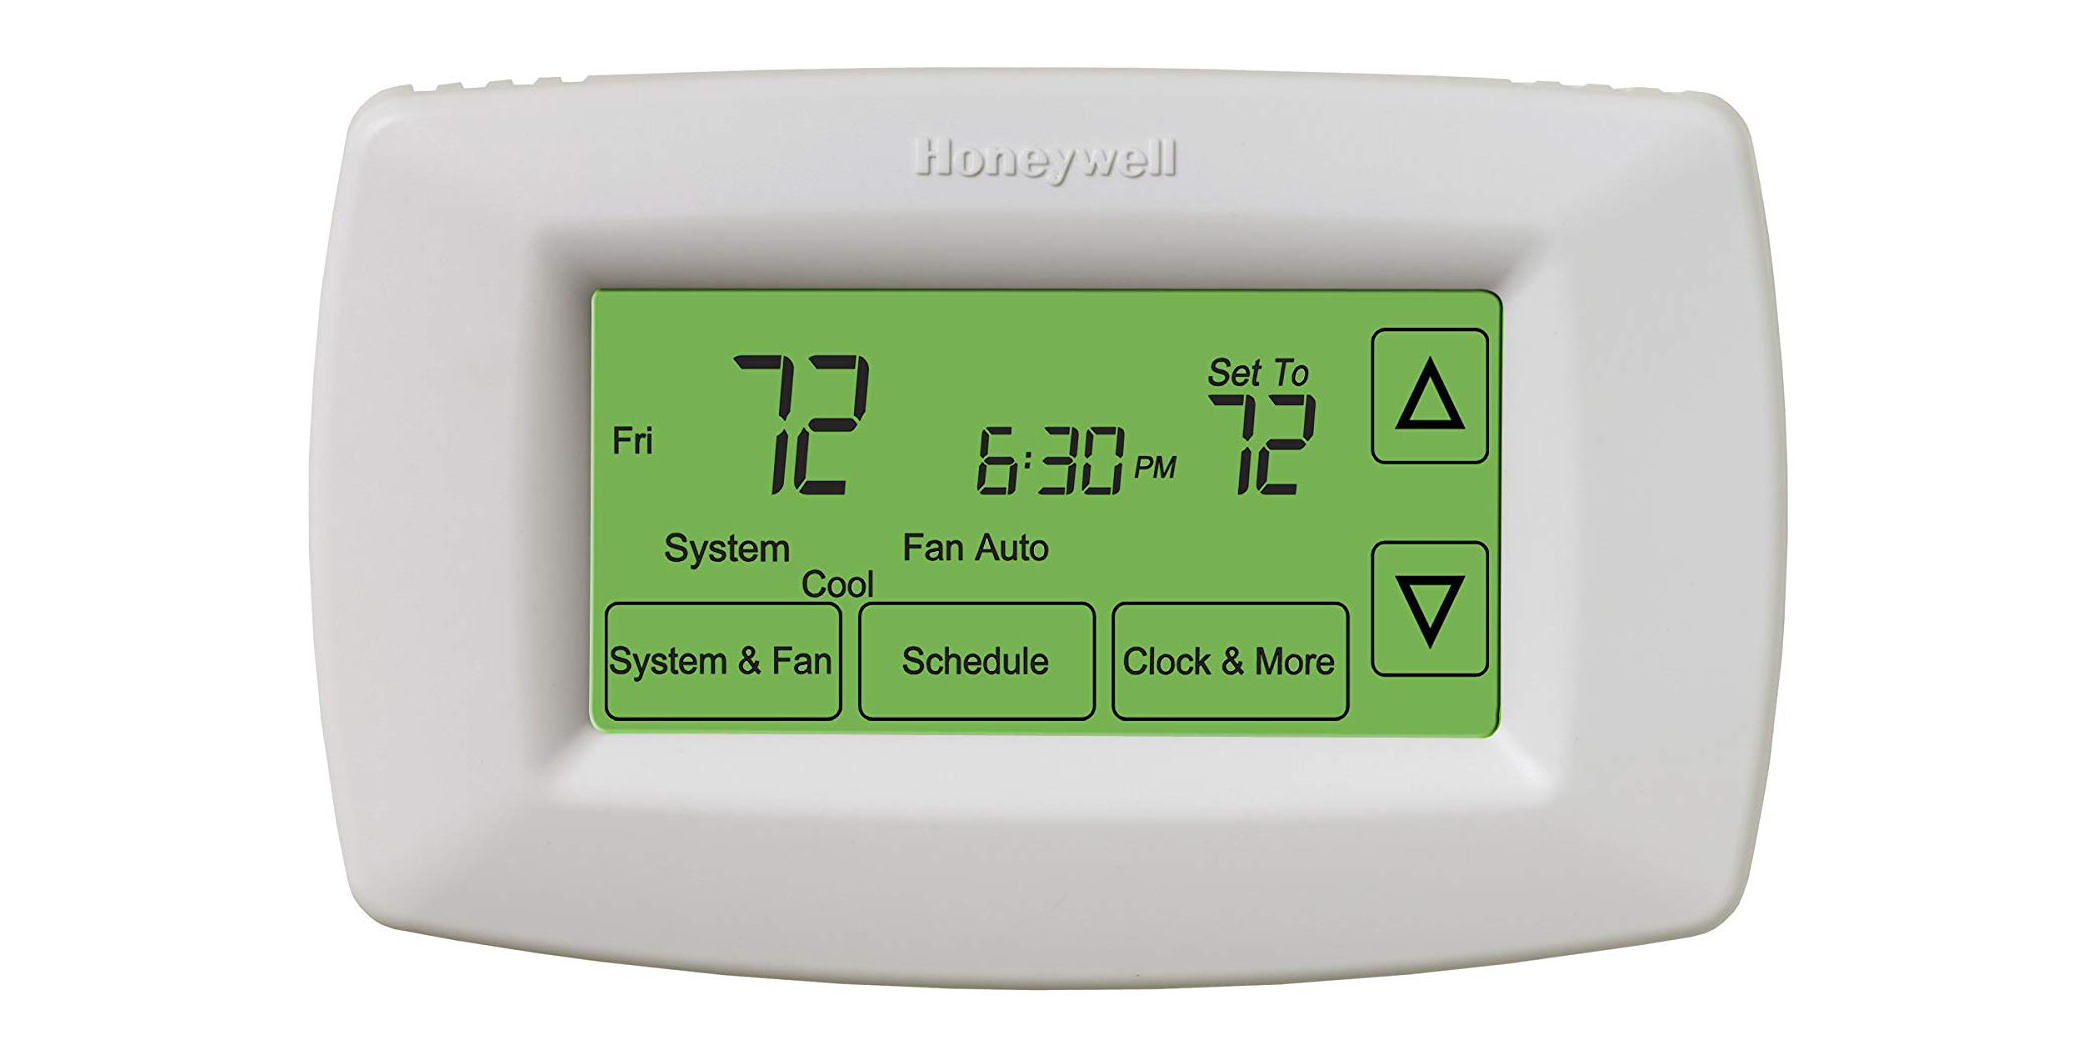 Honeywell Thermostat Reset Program